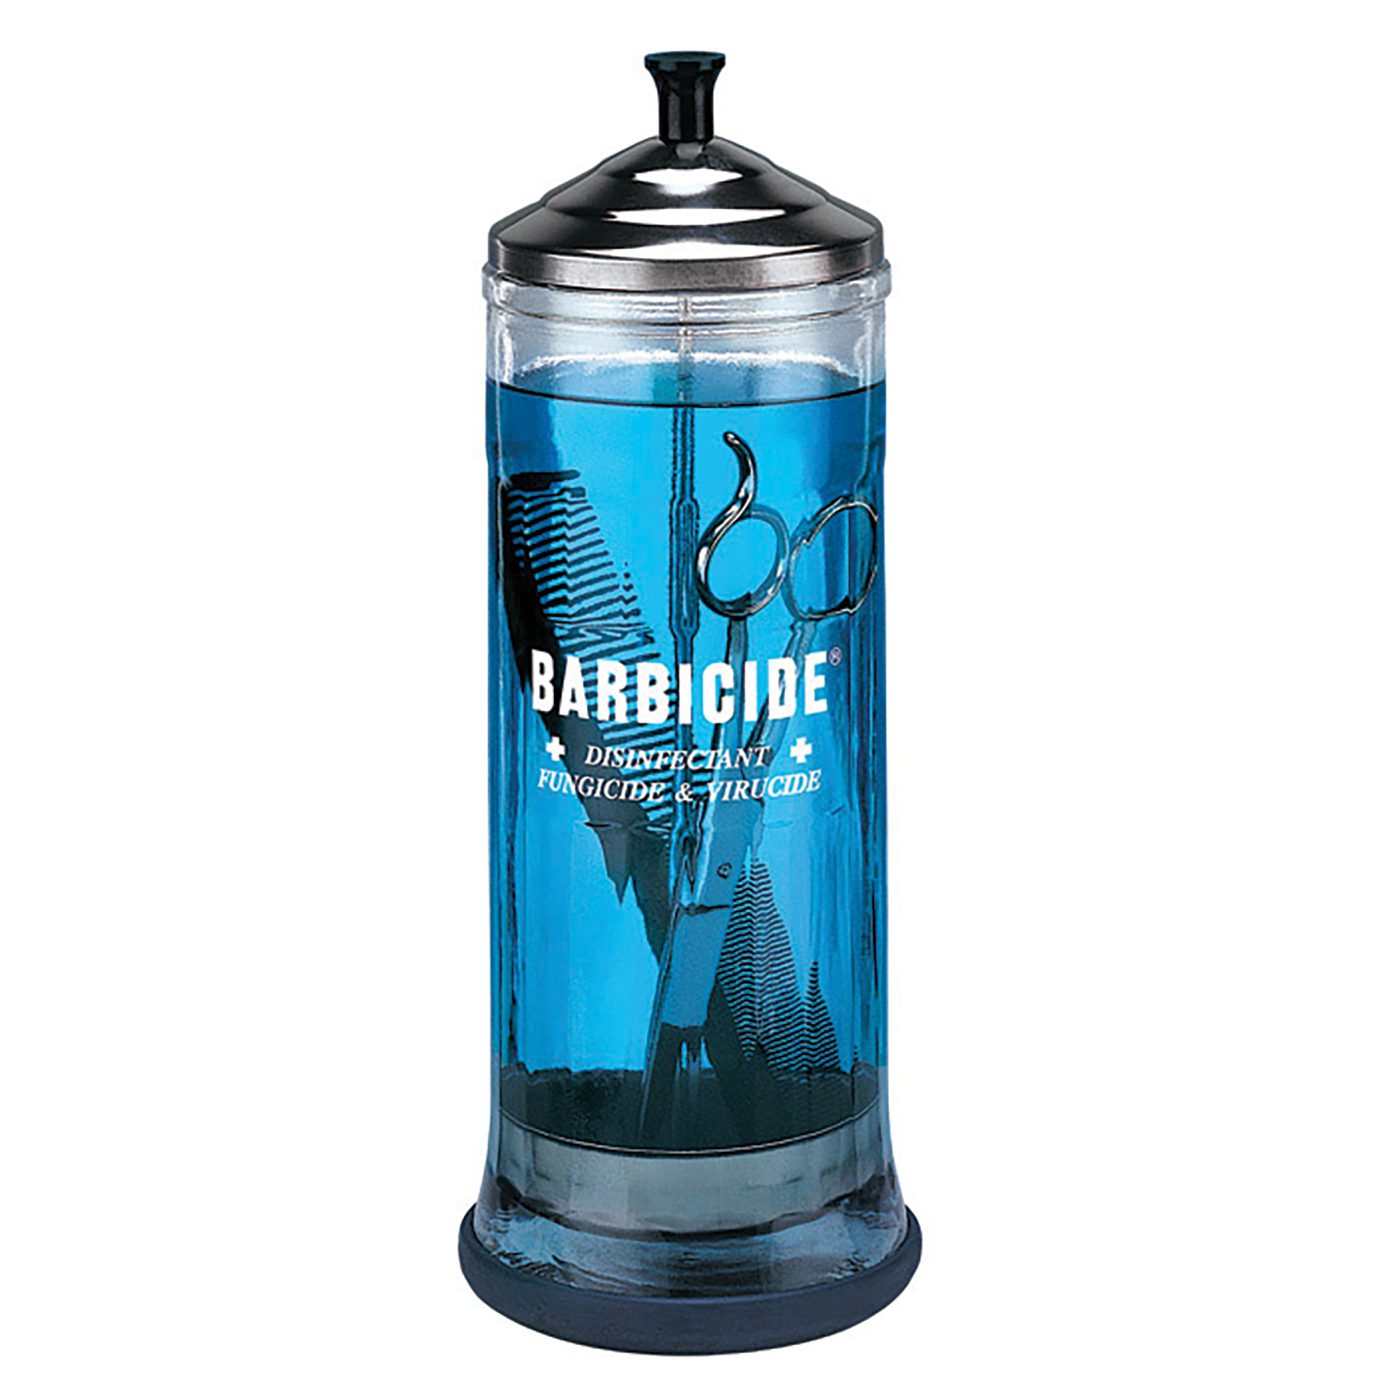 Barbicide Disinfecting Jar, 37 oz.